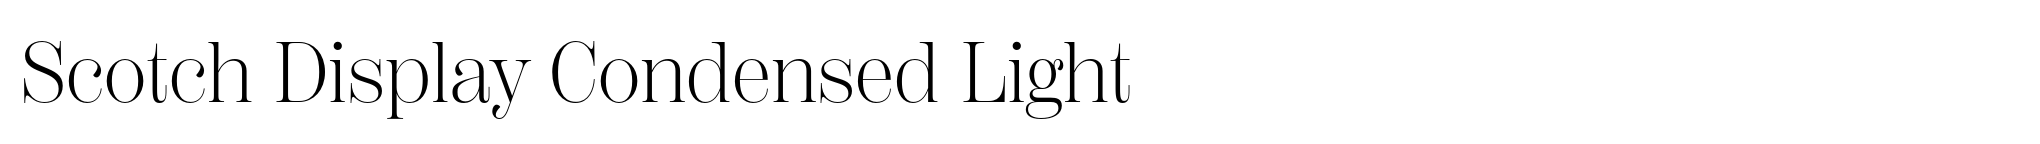 Scotch Display Condensed Light image